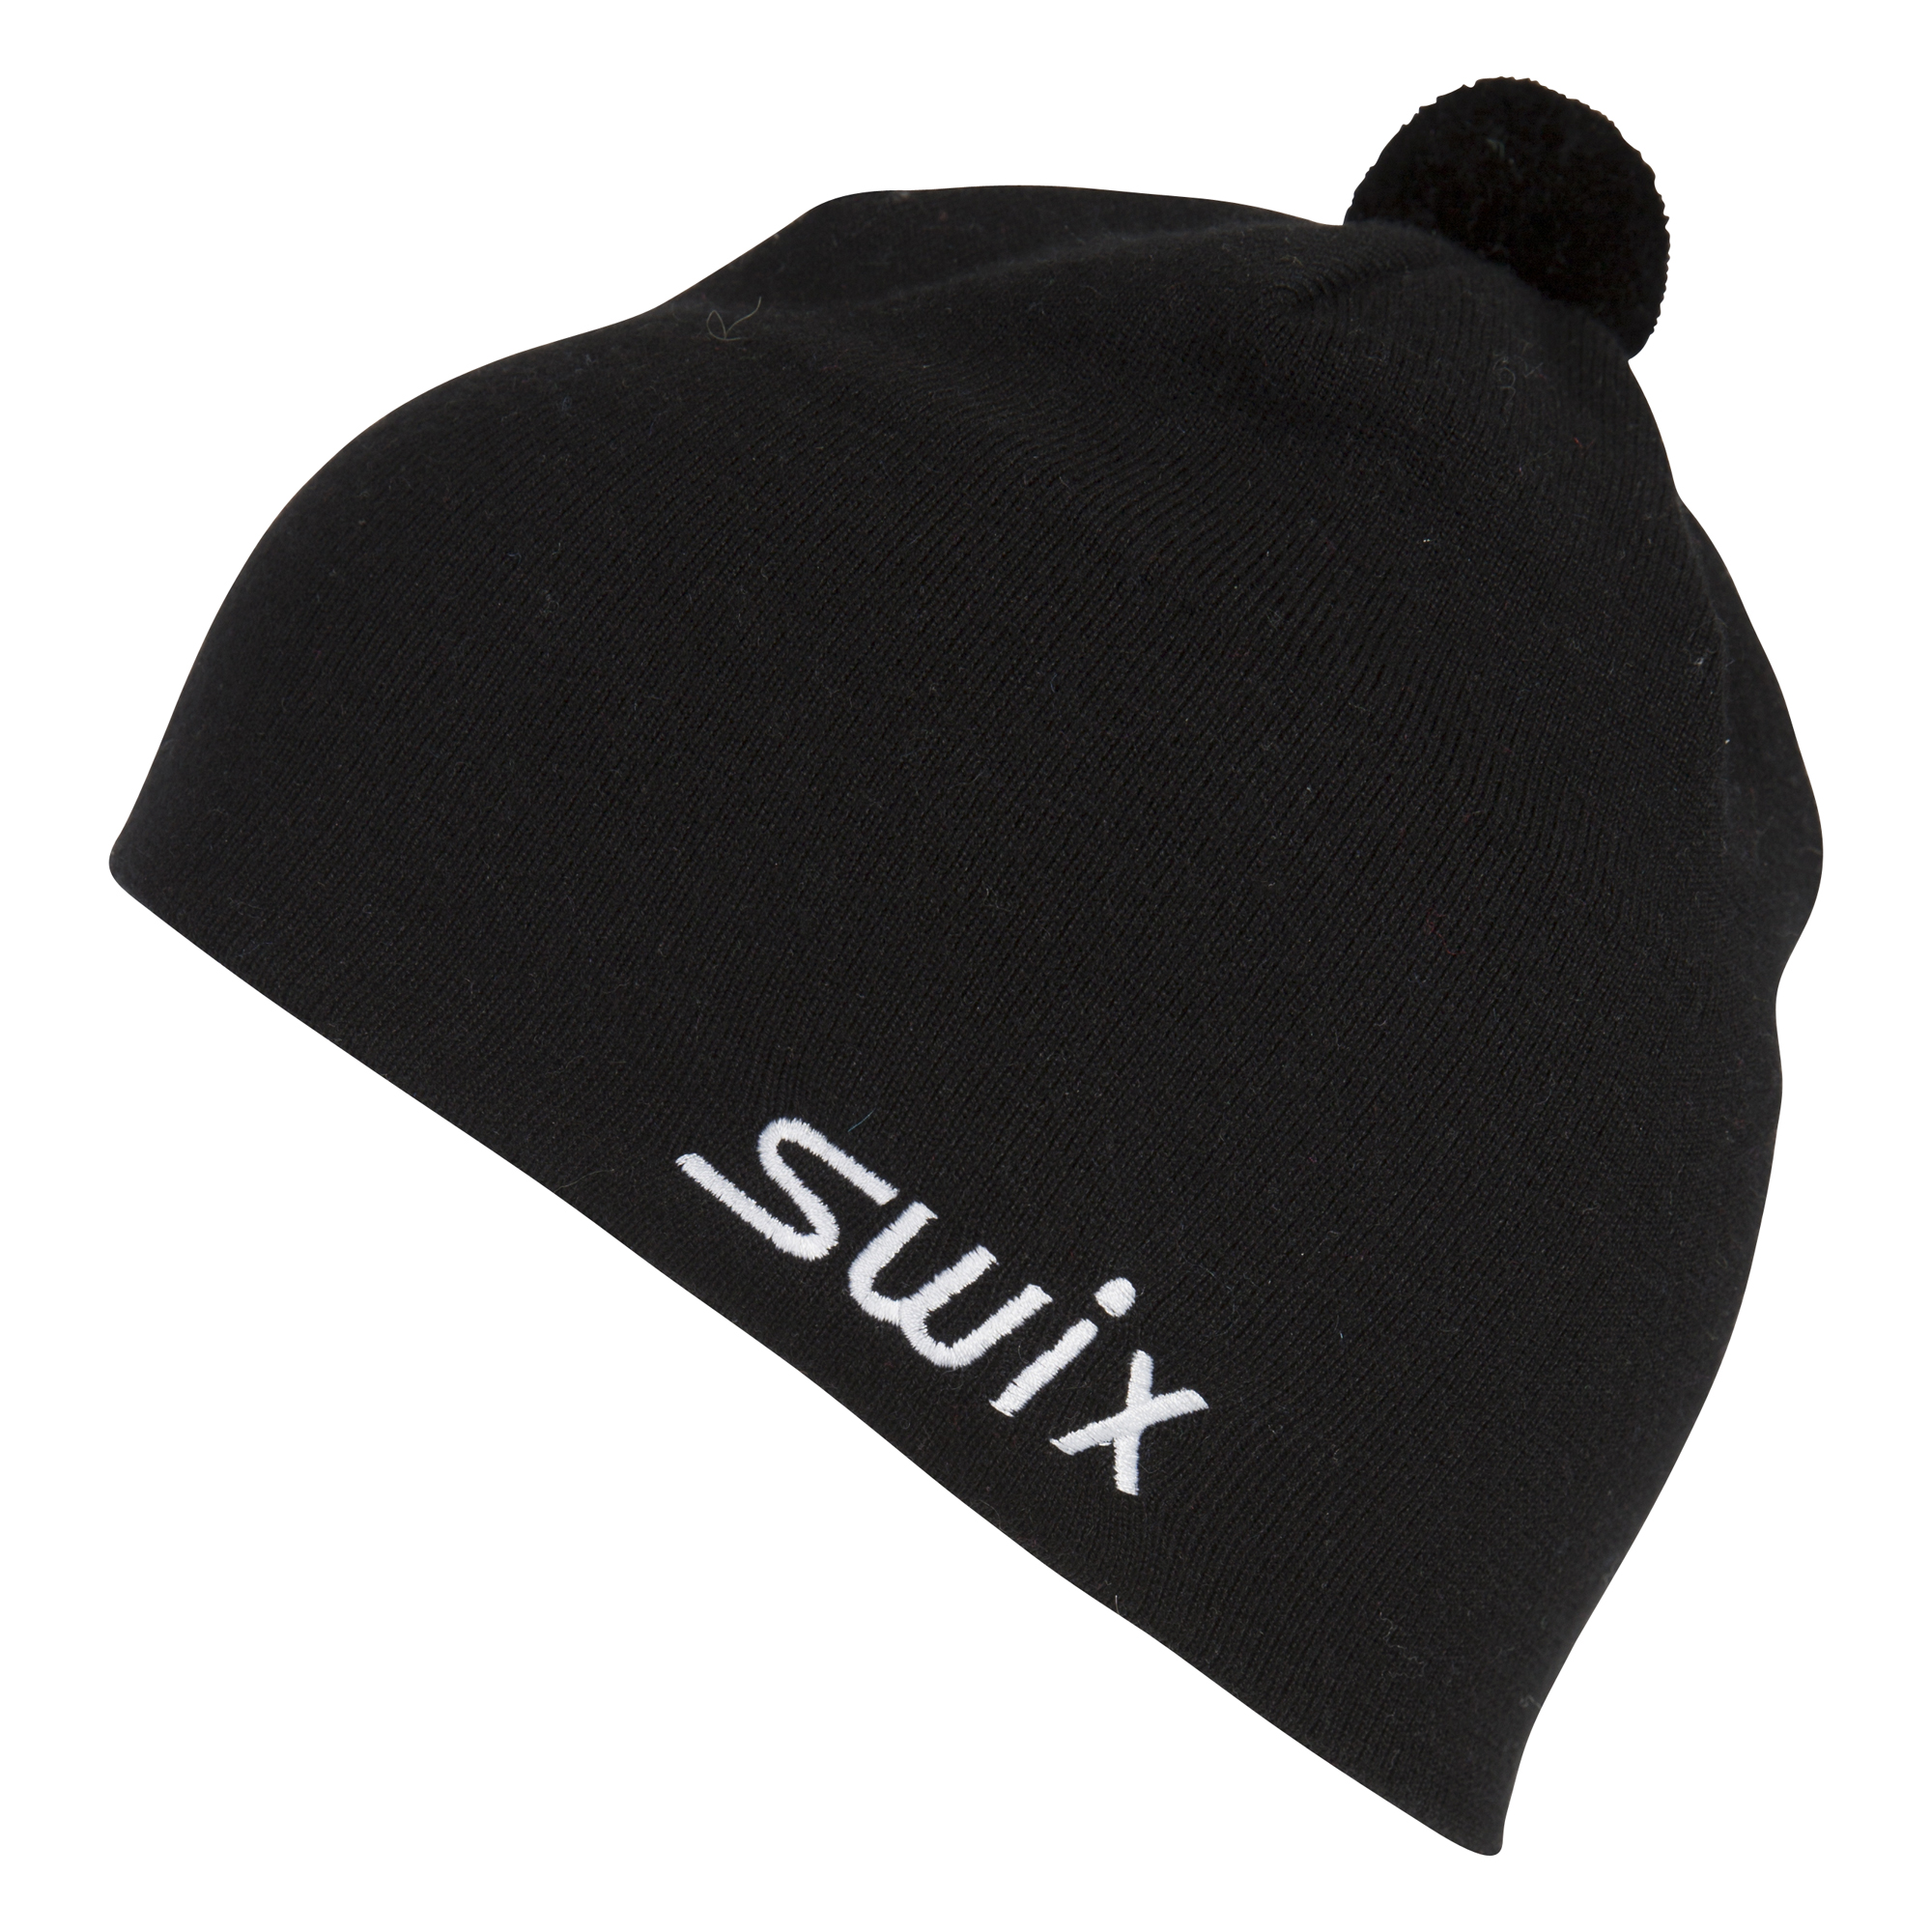 Swix Tradition hat (Black) skilue-0